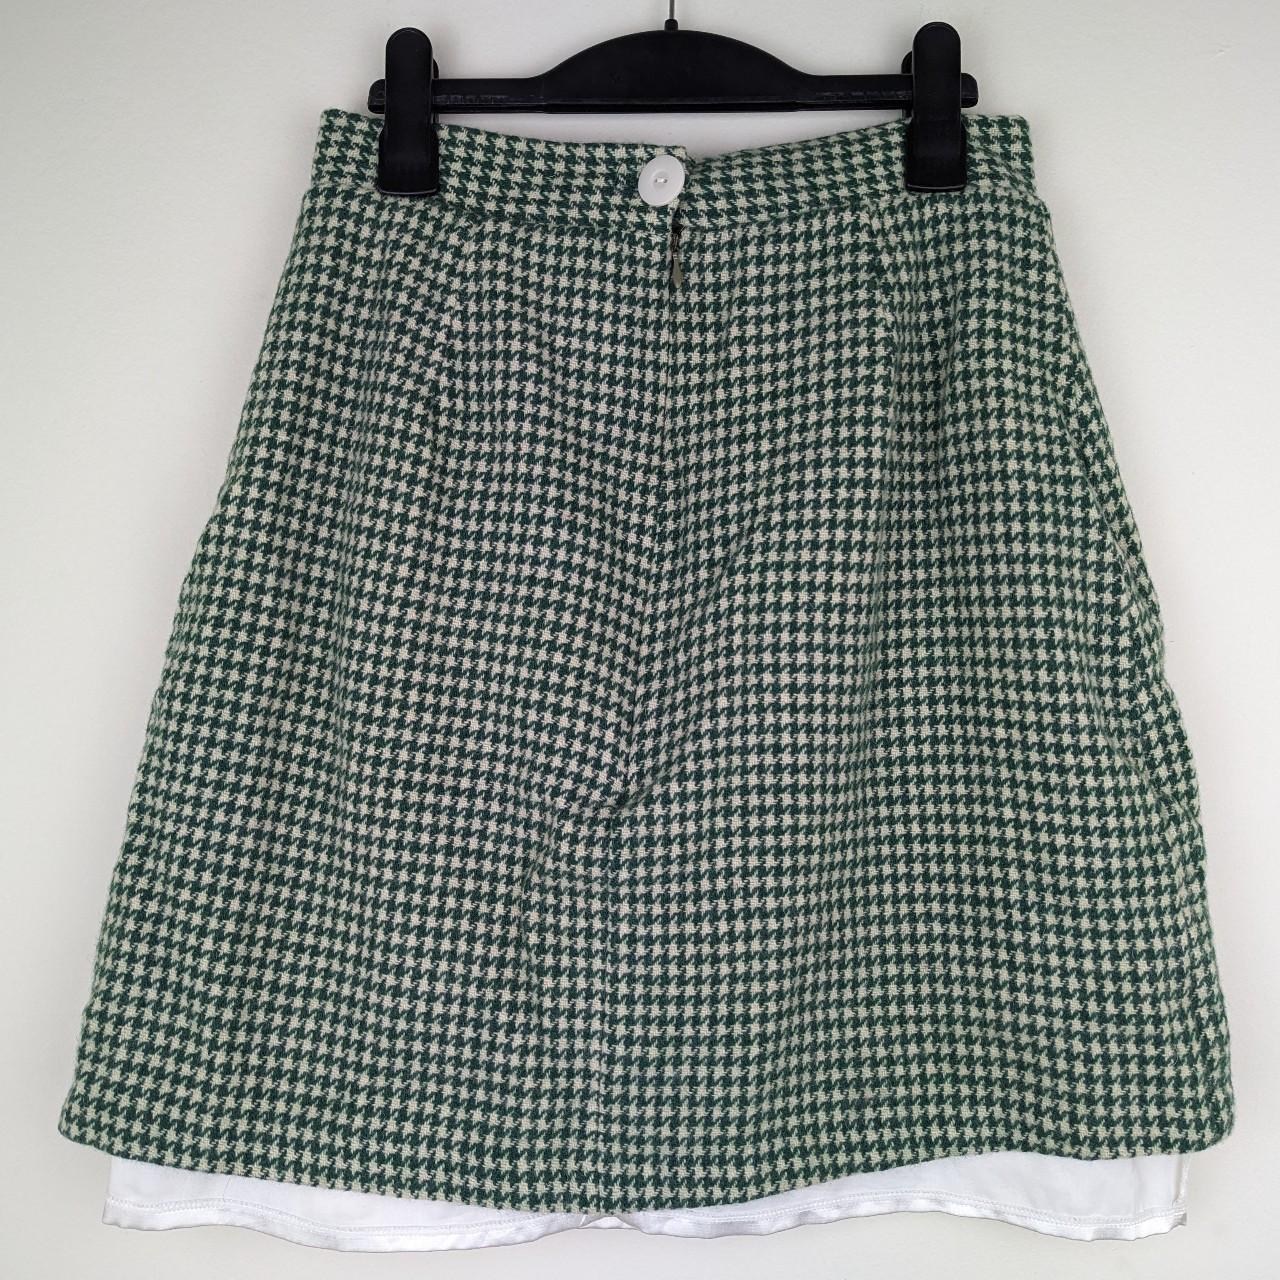 Tara Starlet Green Checked A-line mini skirt 60s Mod... - Depop